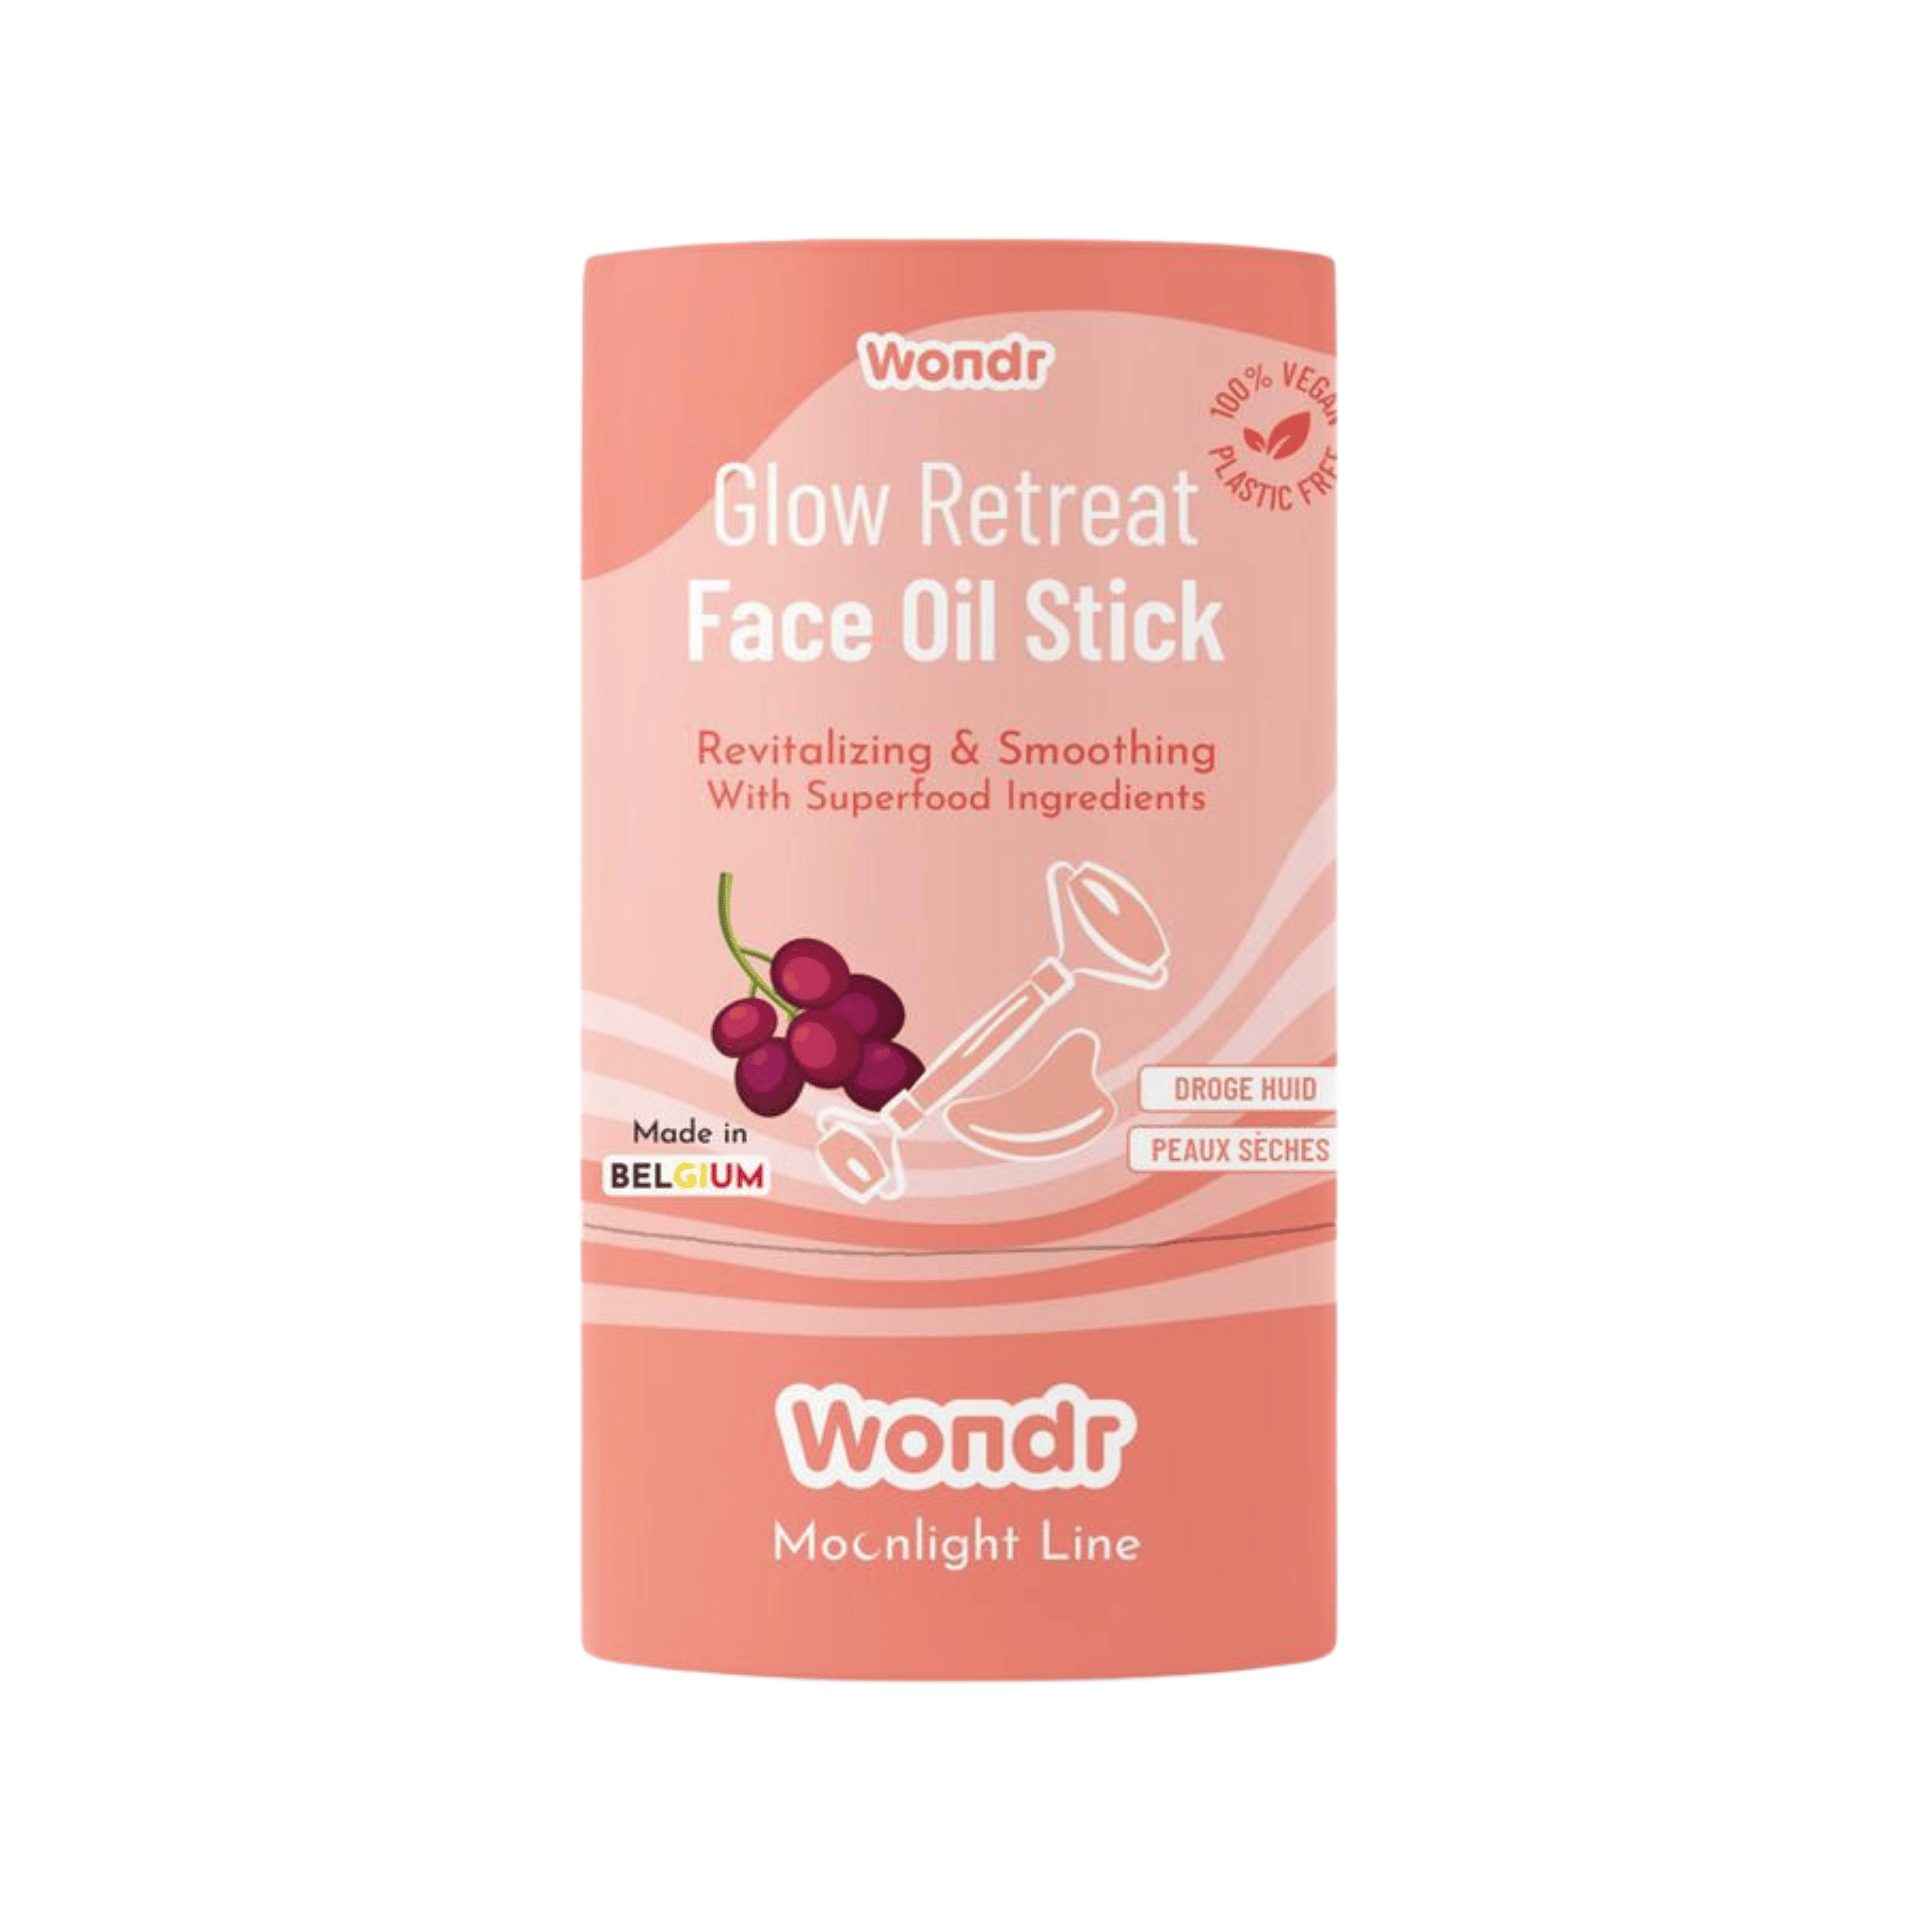 WONDR Glow Retreat Face Oil Stick